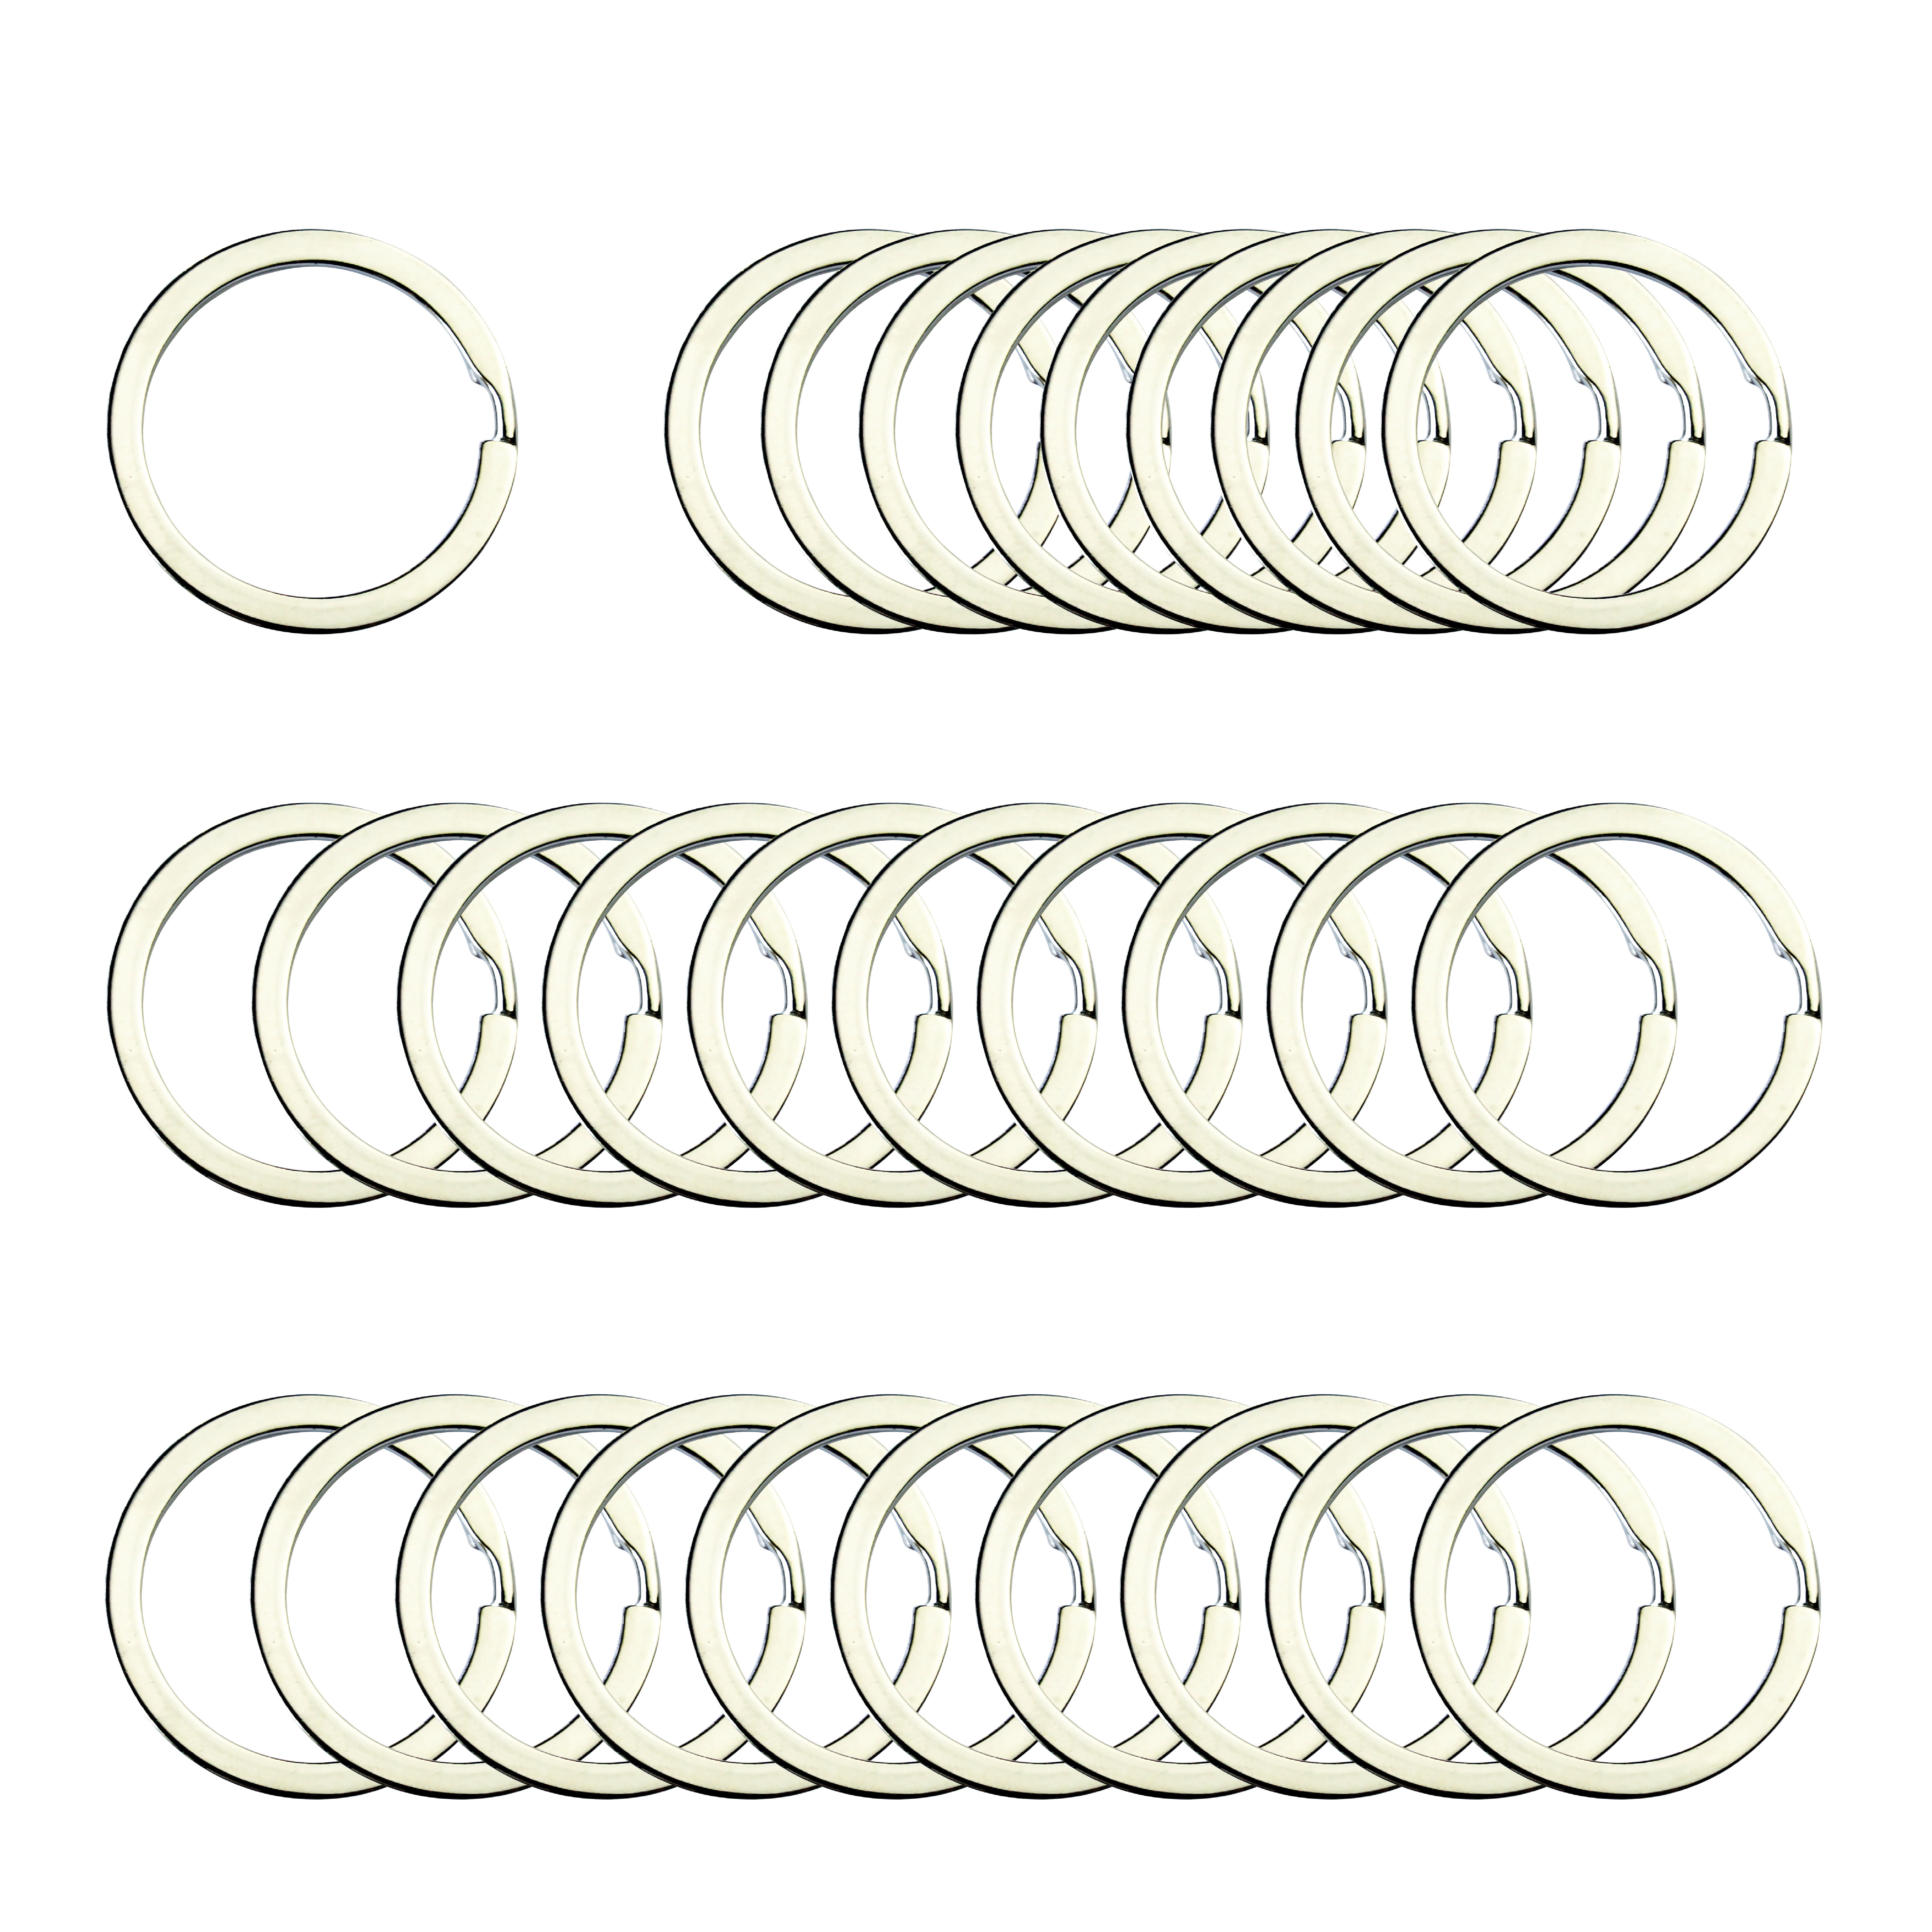 Key Rings Metal Flat Split Key Chains Rings for Home Car Keys Attachment 1 Inch/25mm,Black,50PCS/Box